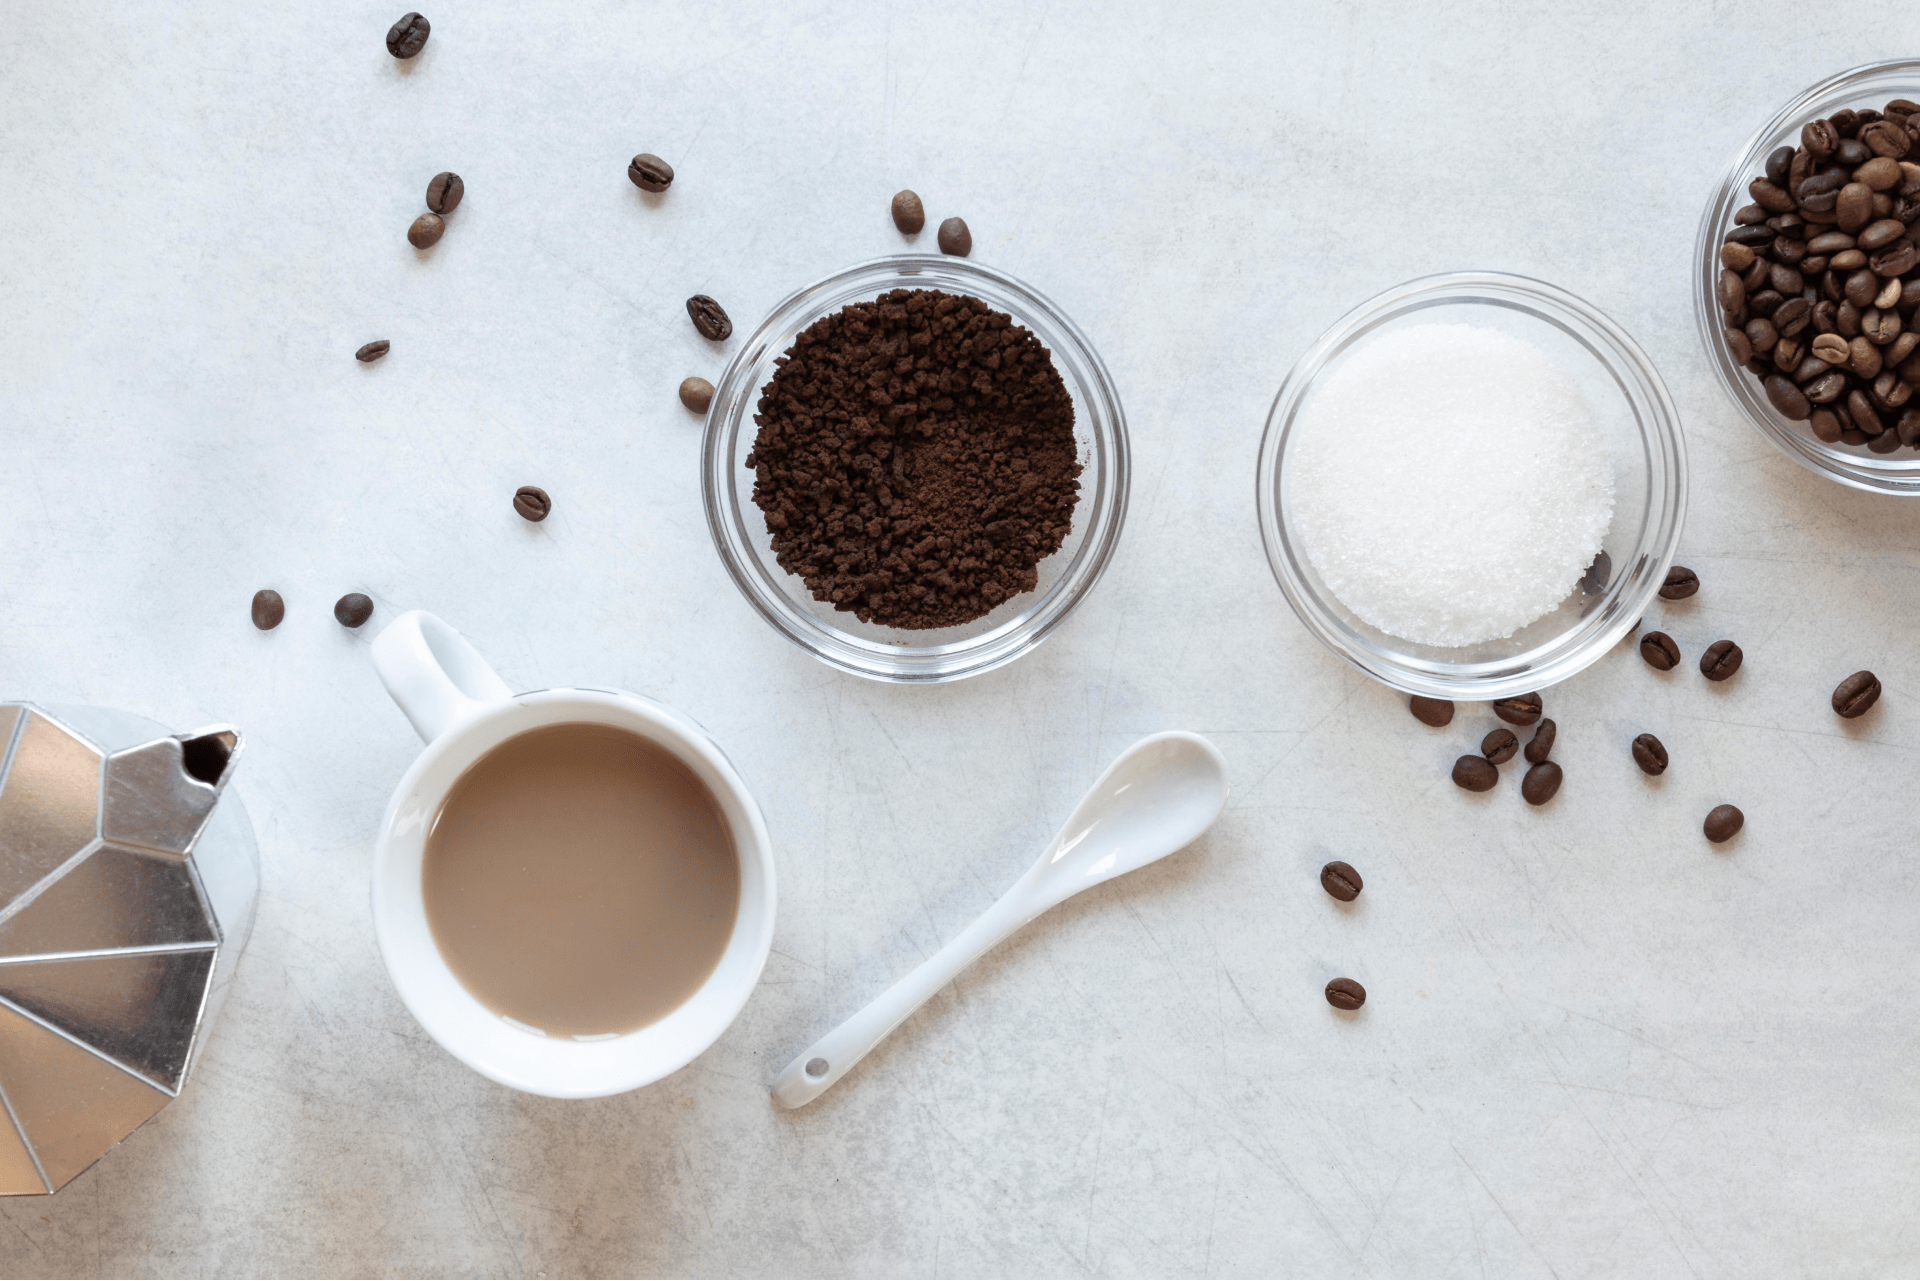 Salt in Coffee – Does it Make Sense?